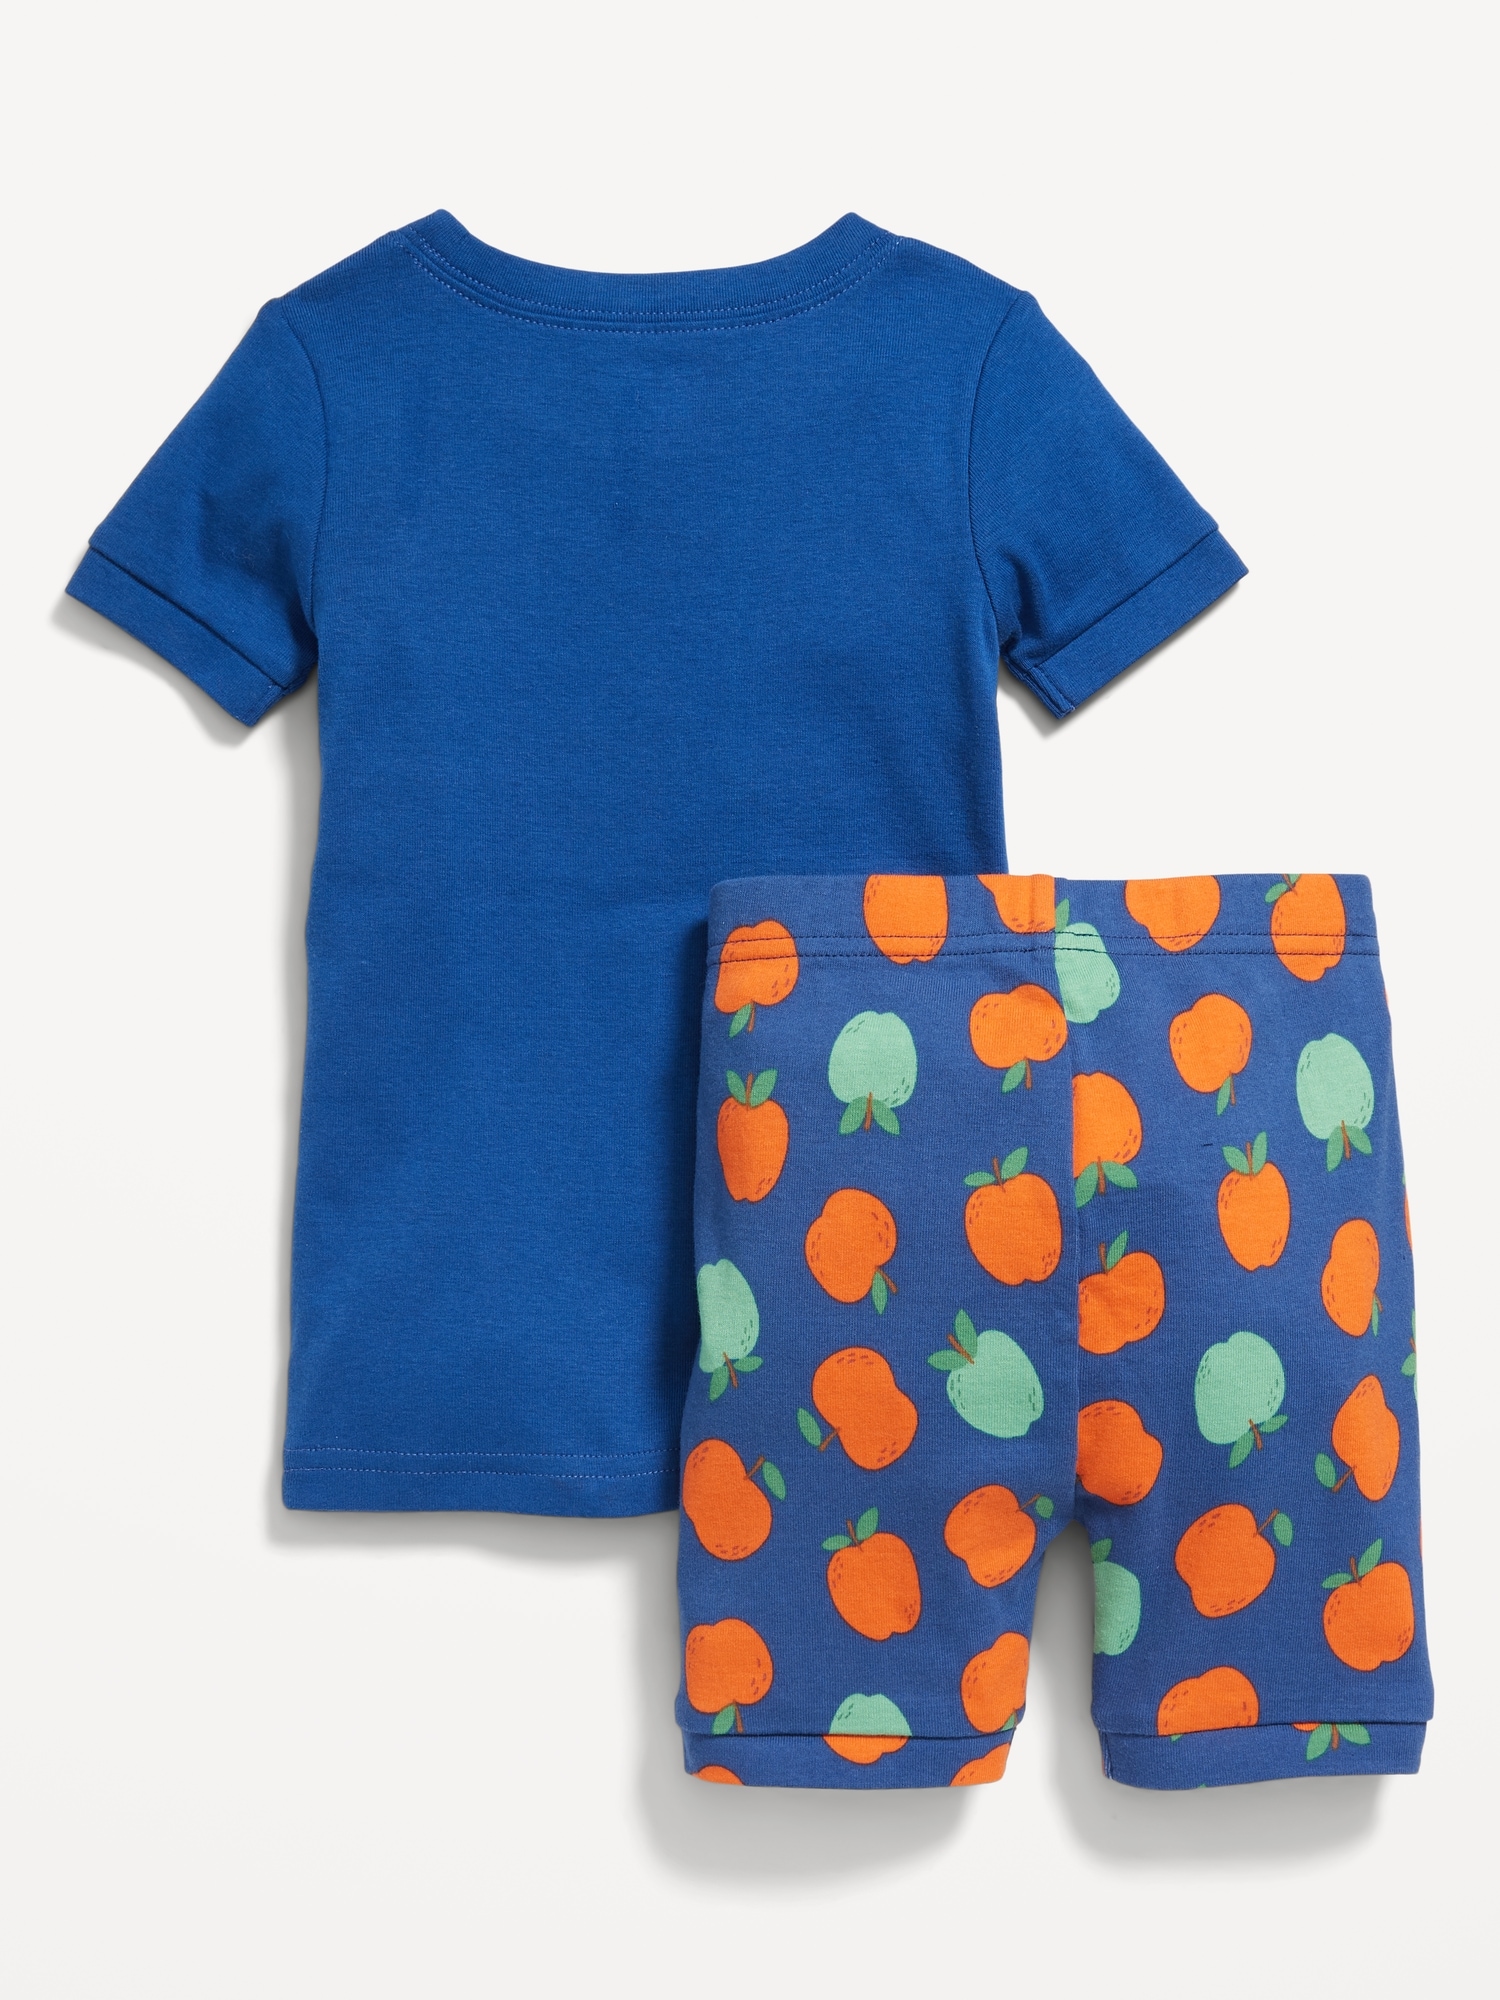 Matching Unisex Snug-Fit Printed Pajama Set for Toddler & Baby